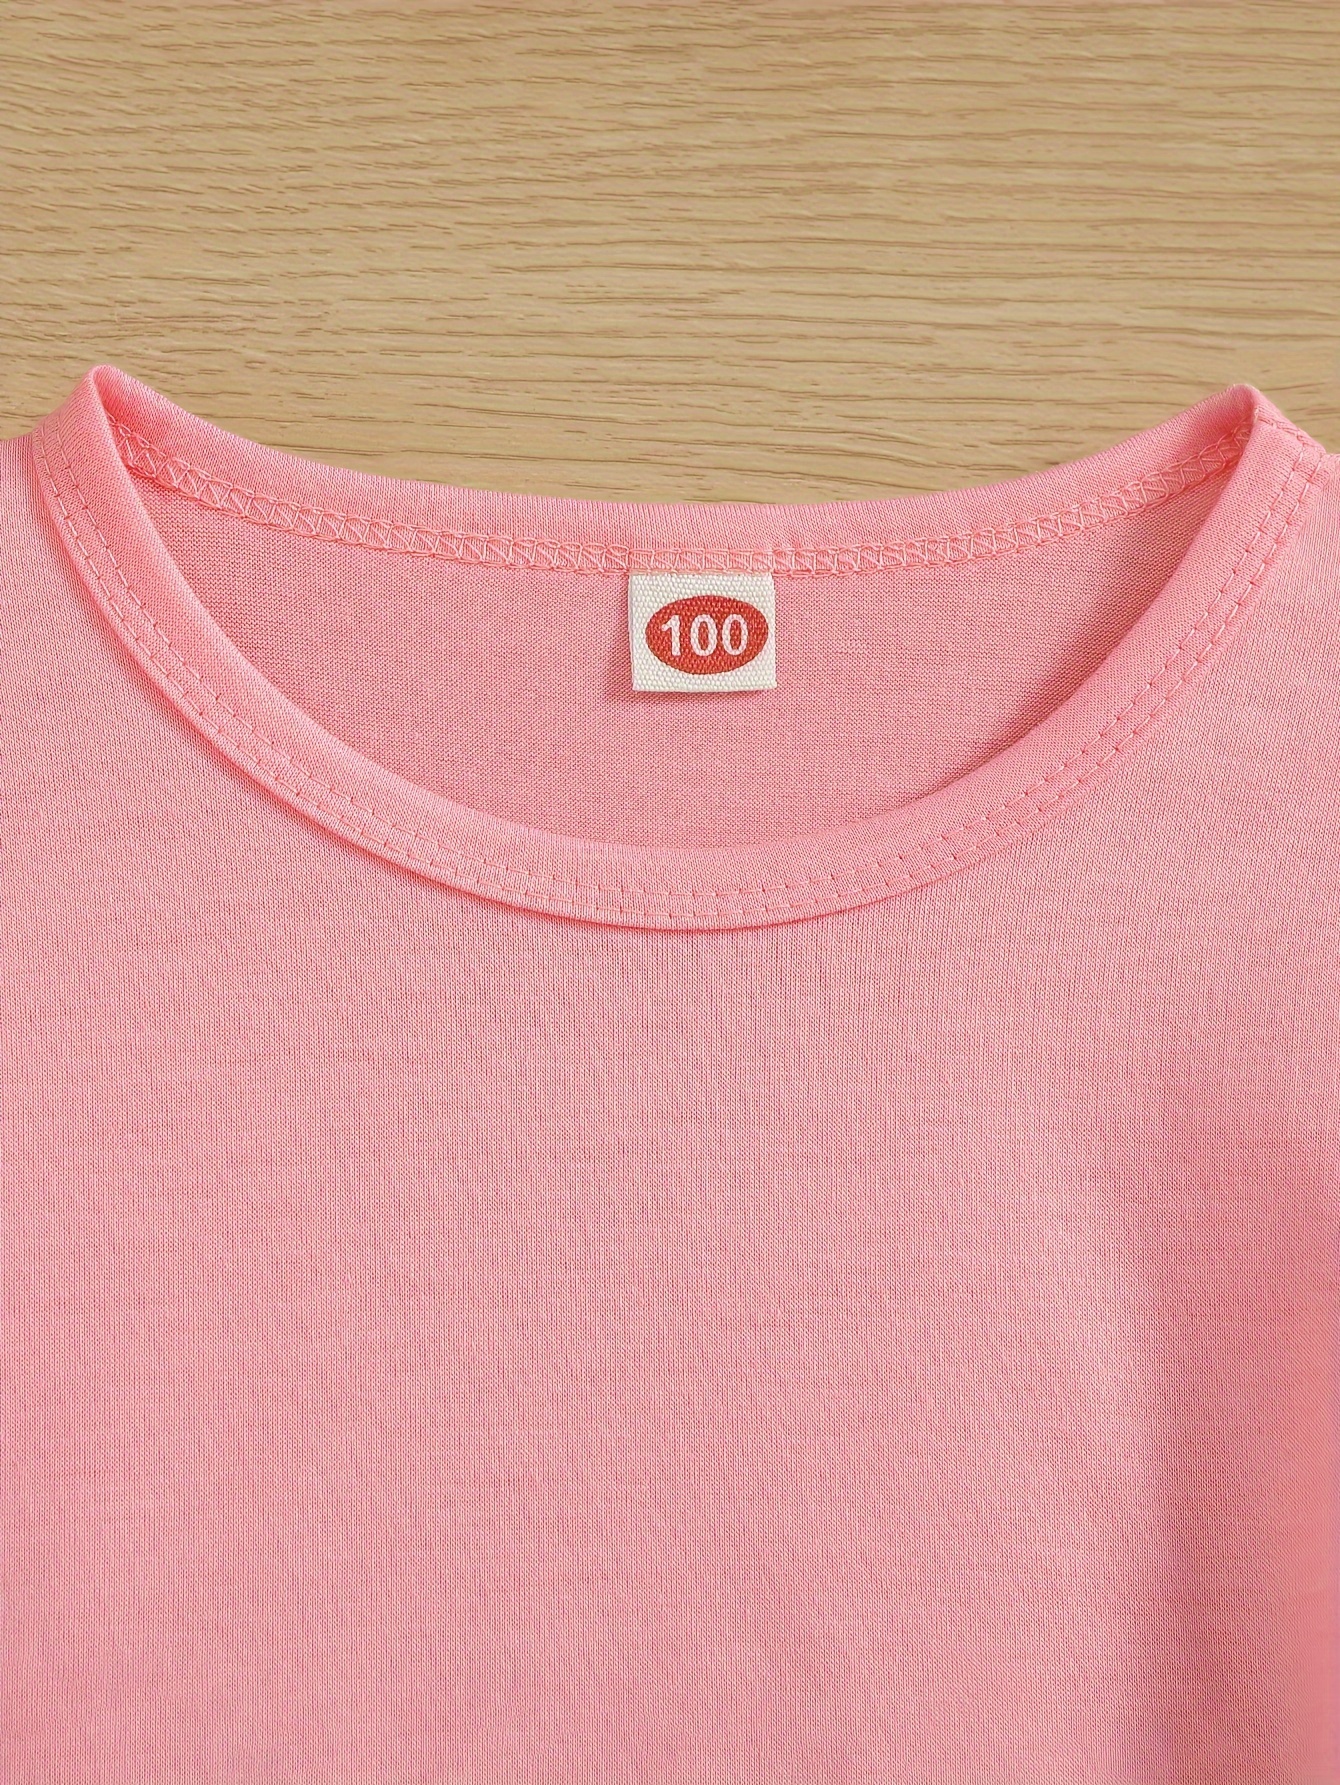 Casual Pink Check Shirt - Yoshi